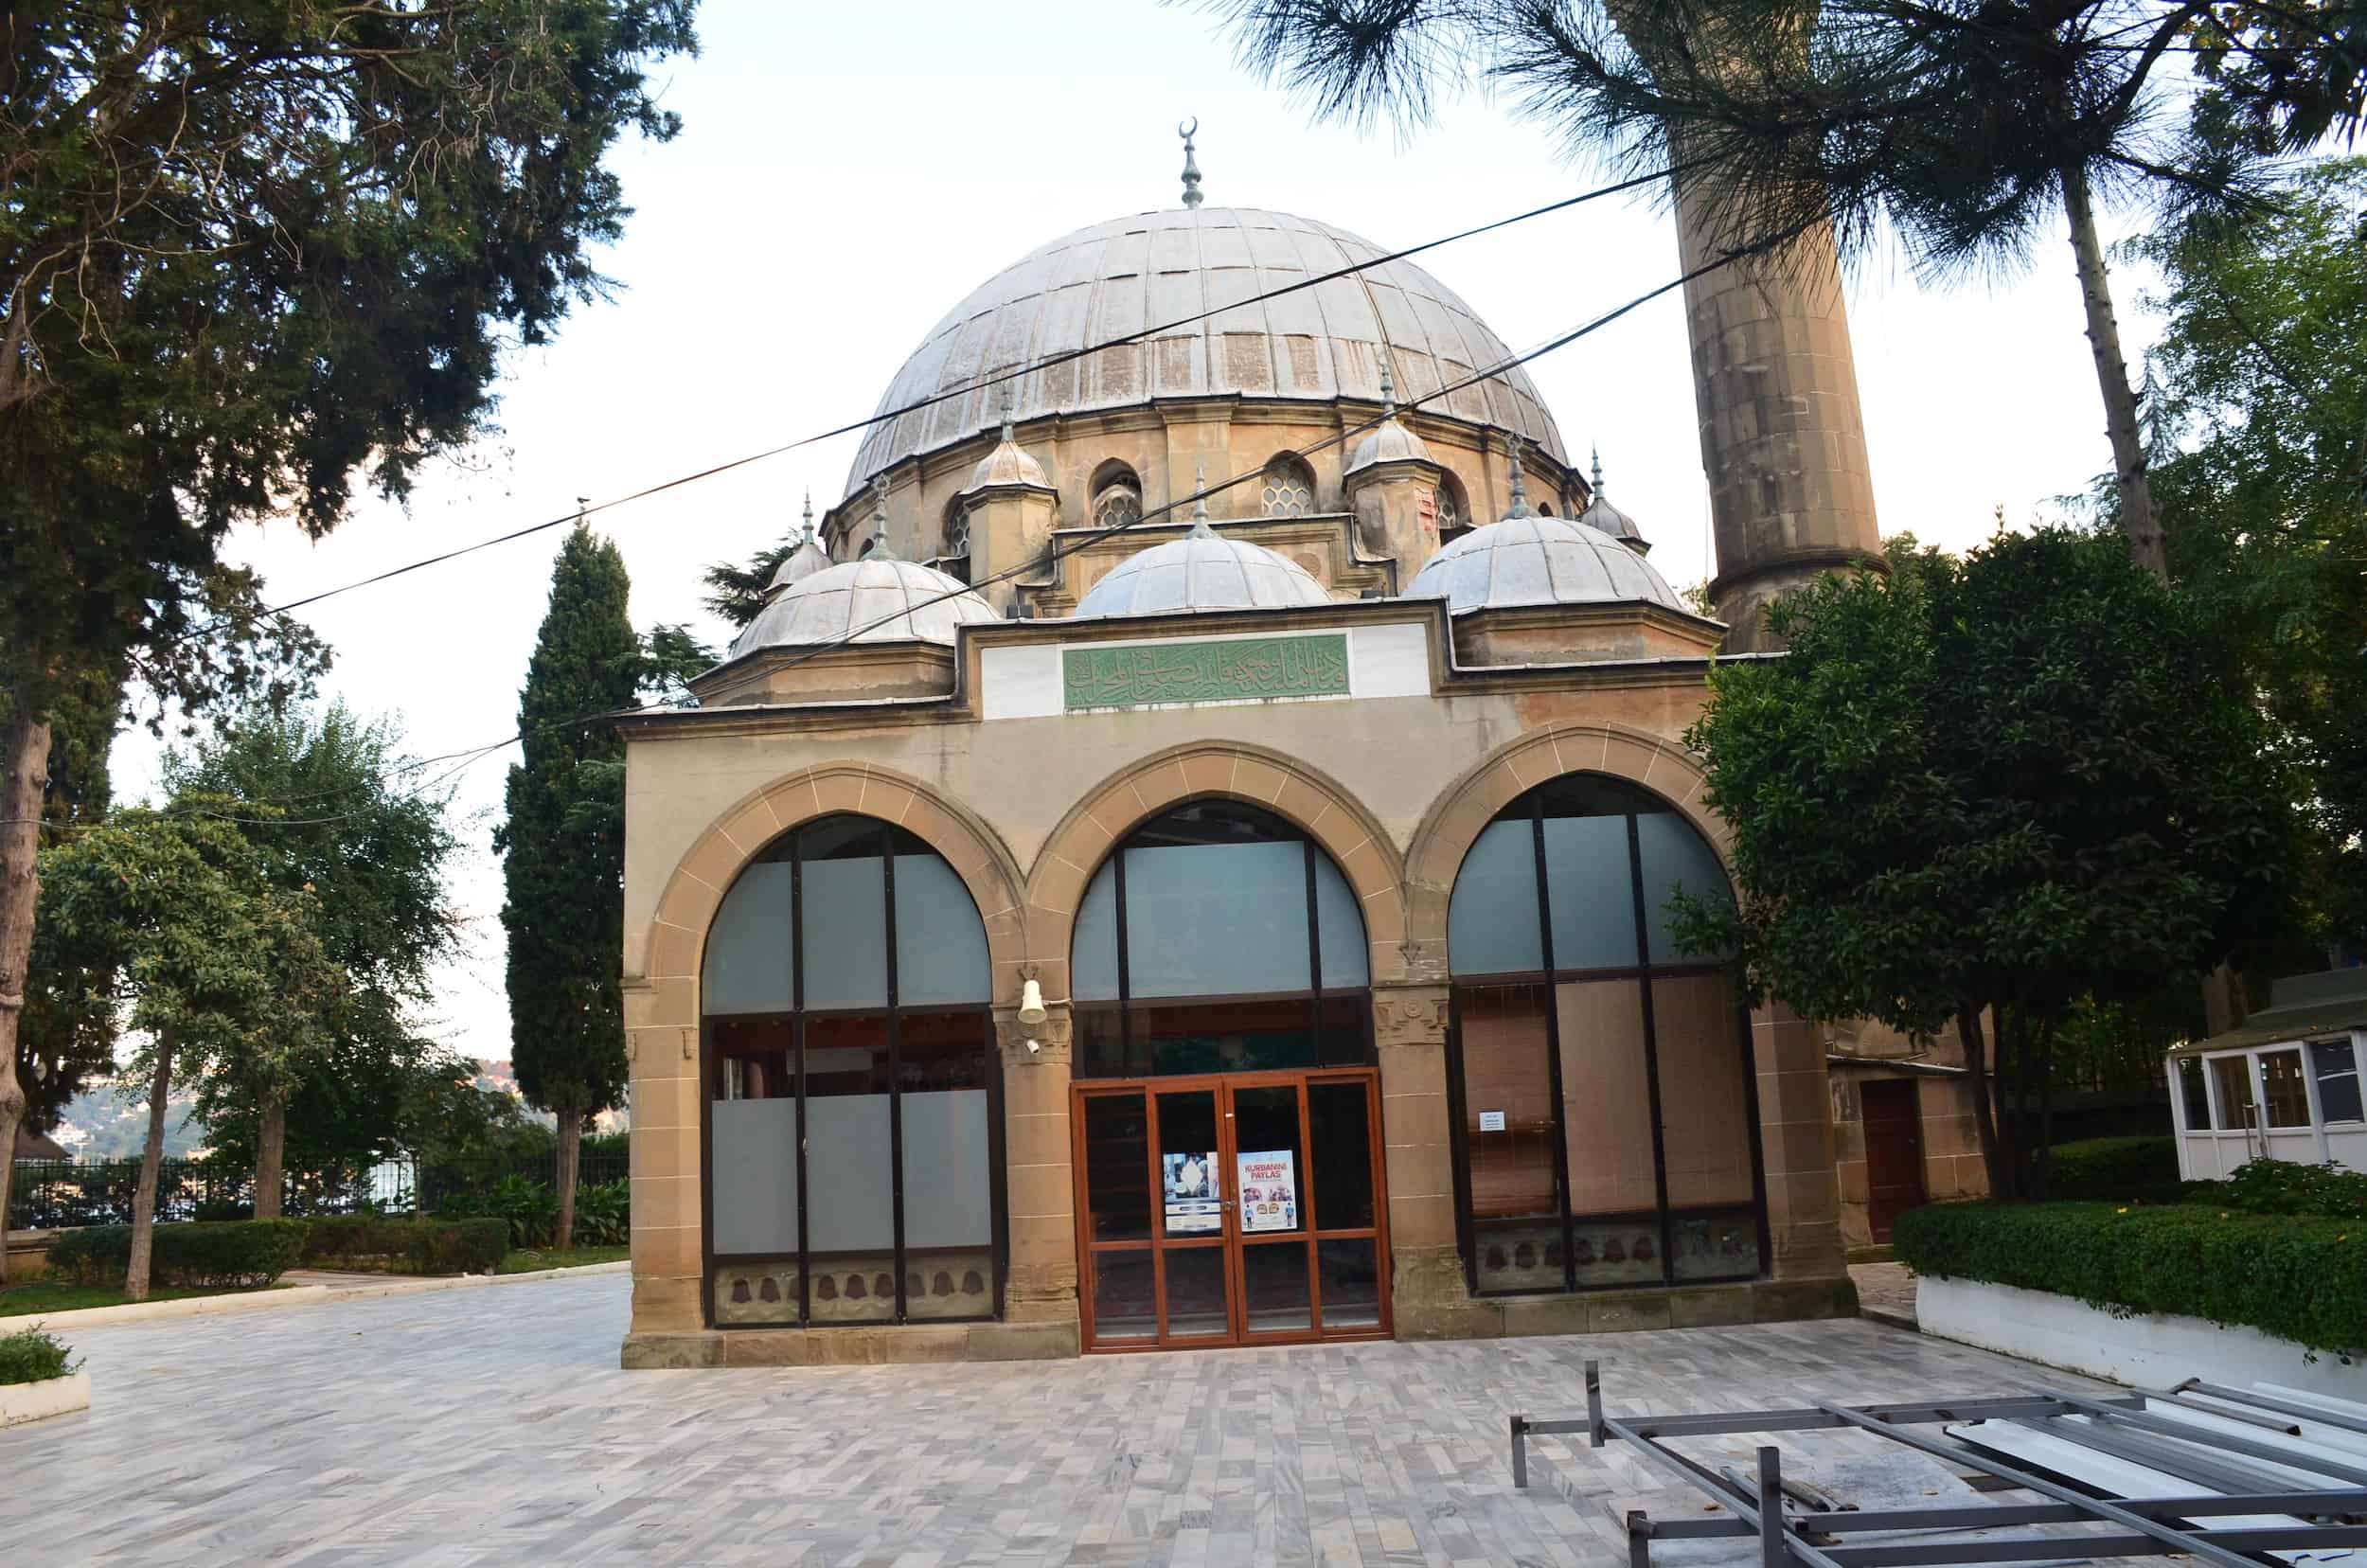 Bebek Mosque in Bebek, Istanbul, Turkey